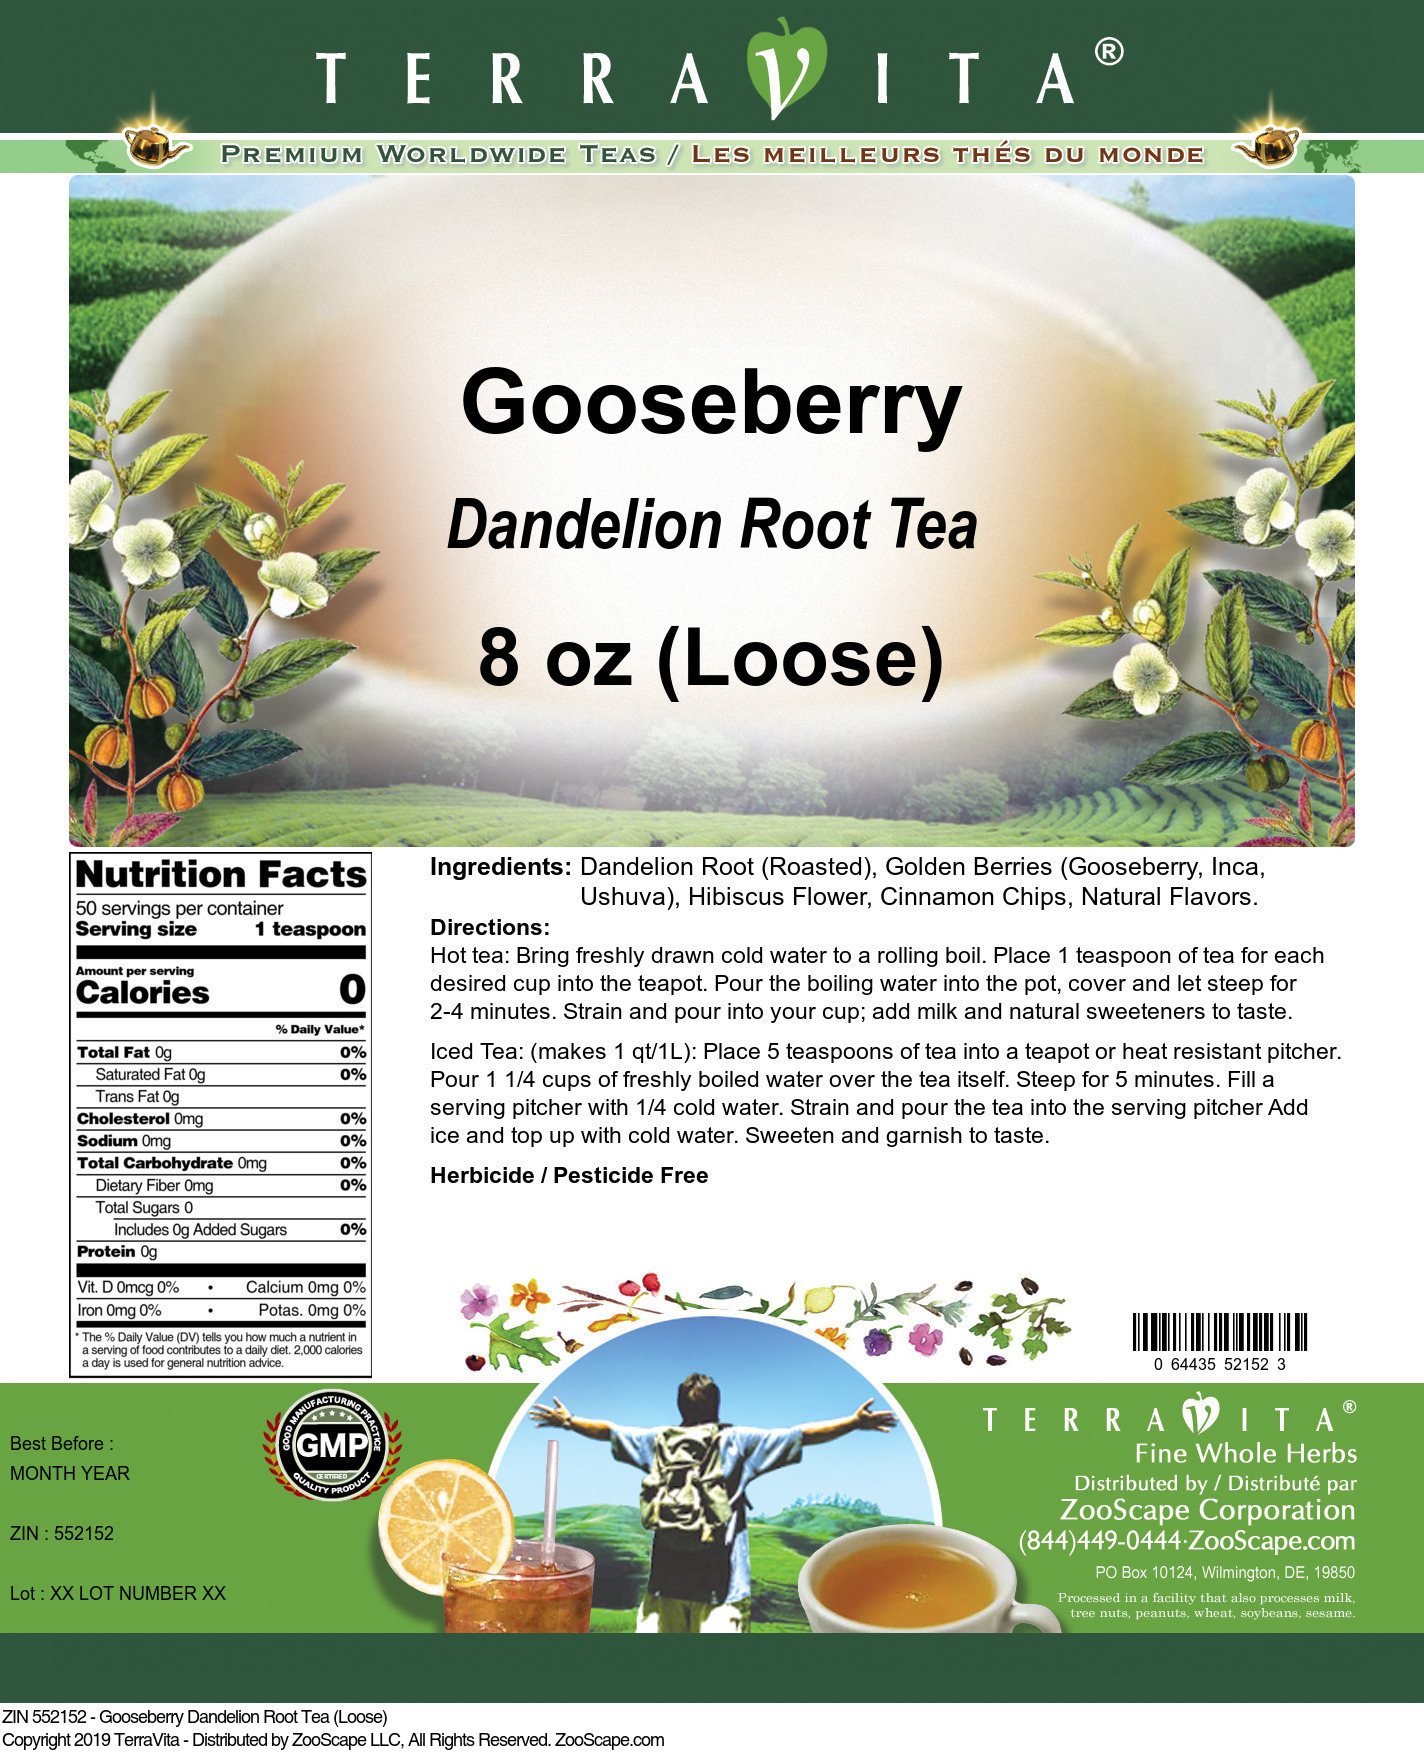 Gooseberry Dandelion Root Tea (Loose) - Label